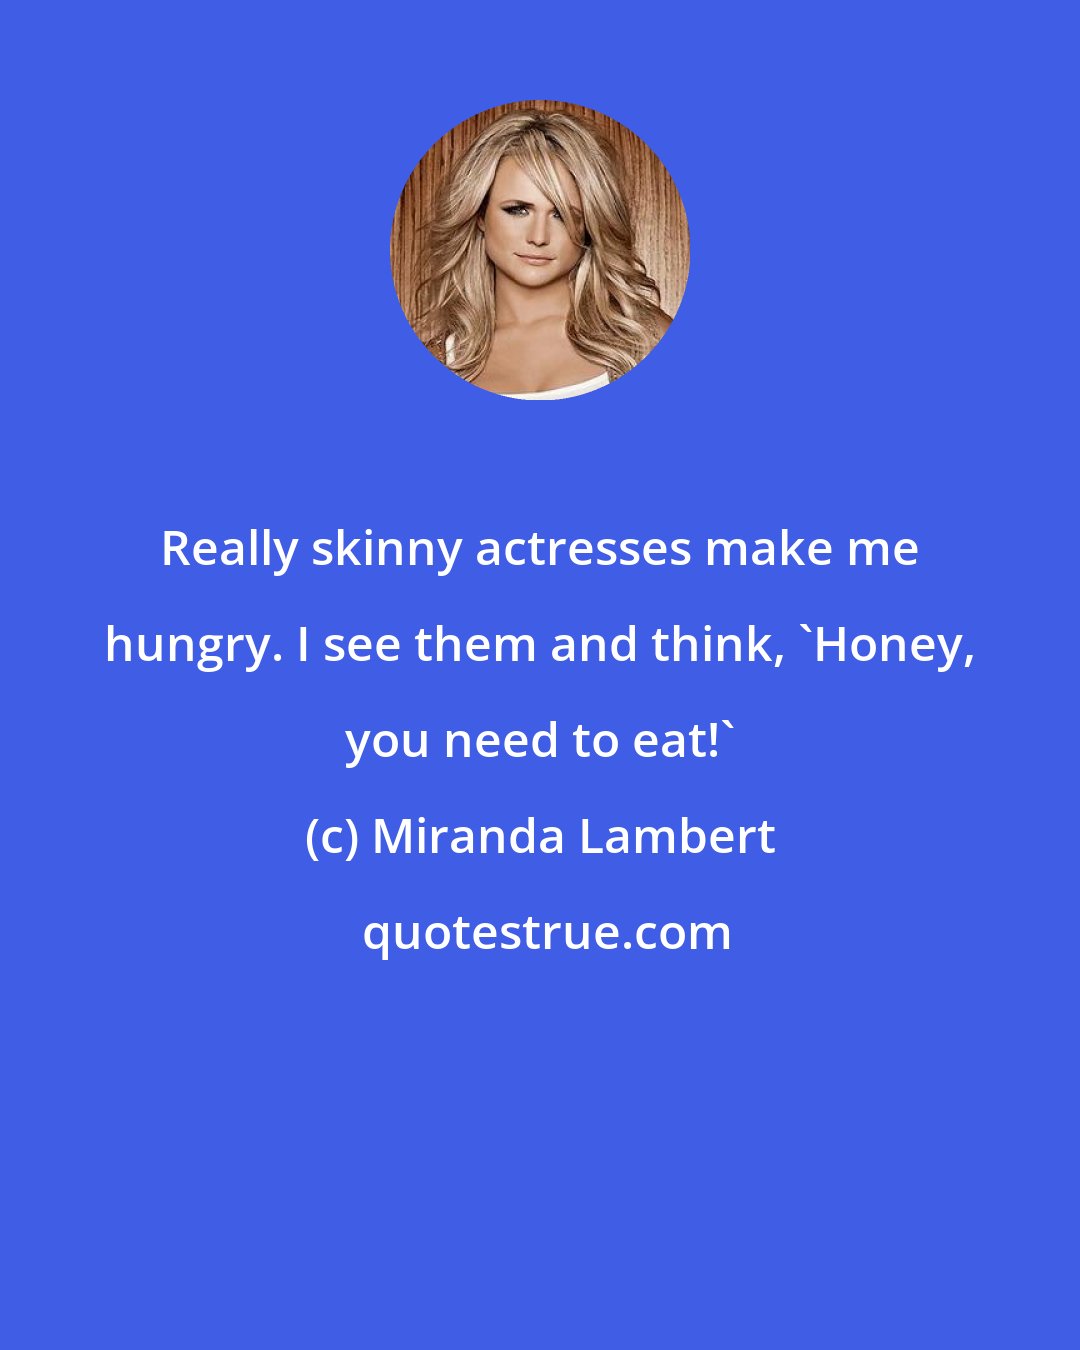 Miranda Lambert: Really skinny actresses make me hungry. I see them and think, 'Honey, you need to eat!'